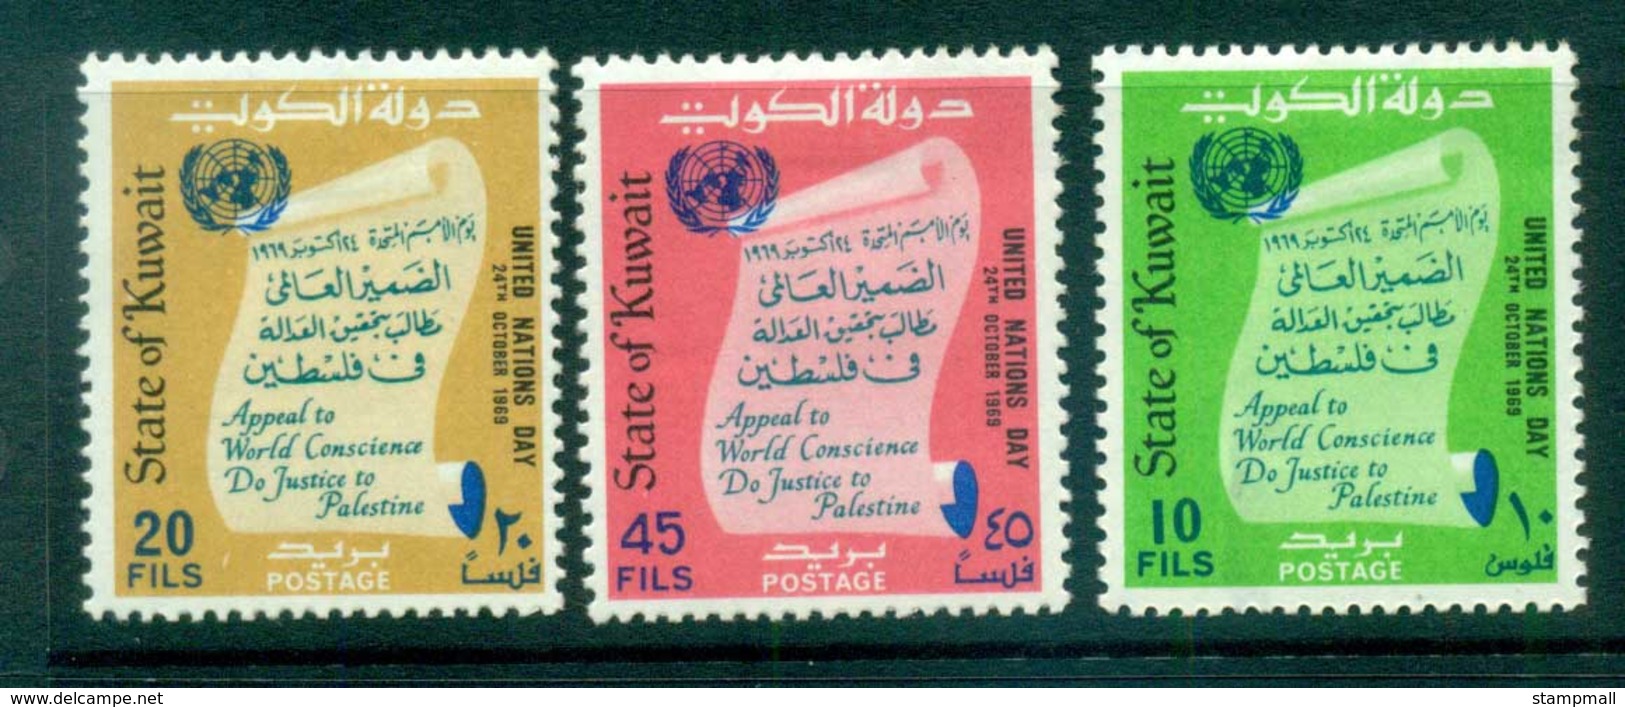 Kuwait 1969 United Nations Day MLH Lot73826 - Kuwait